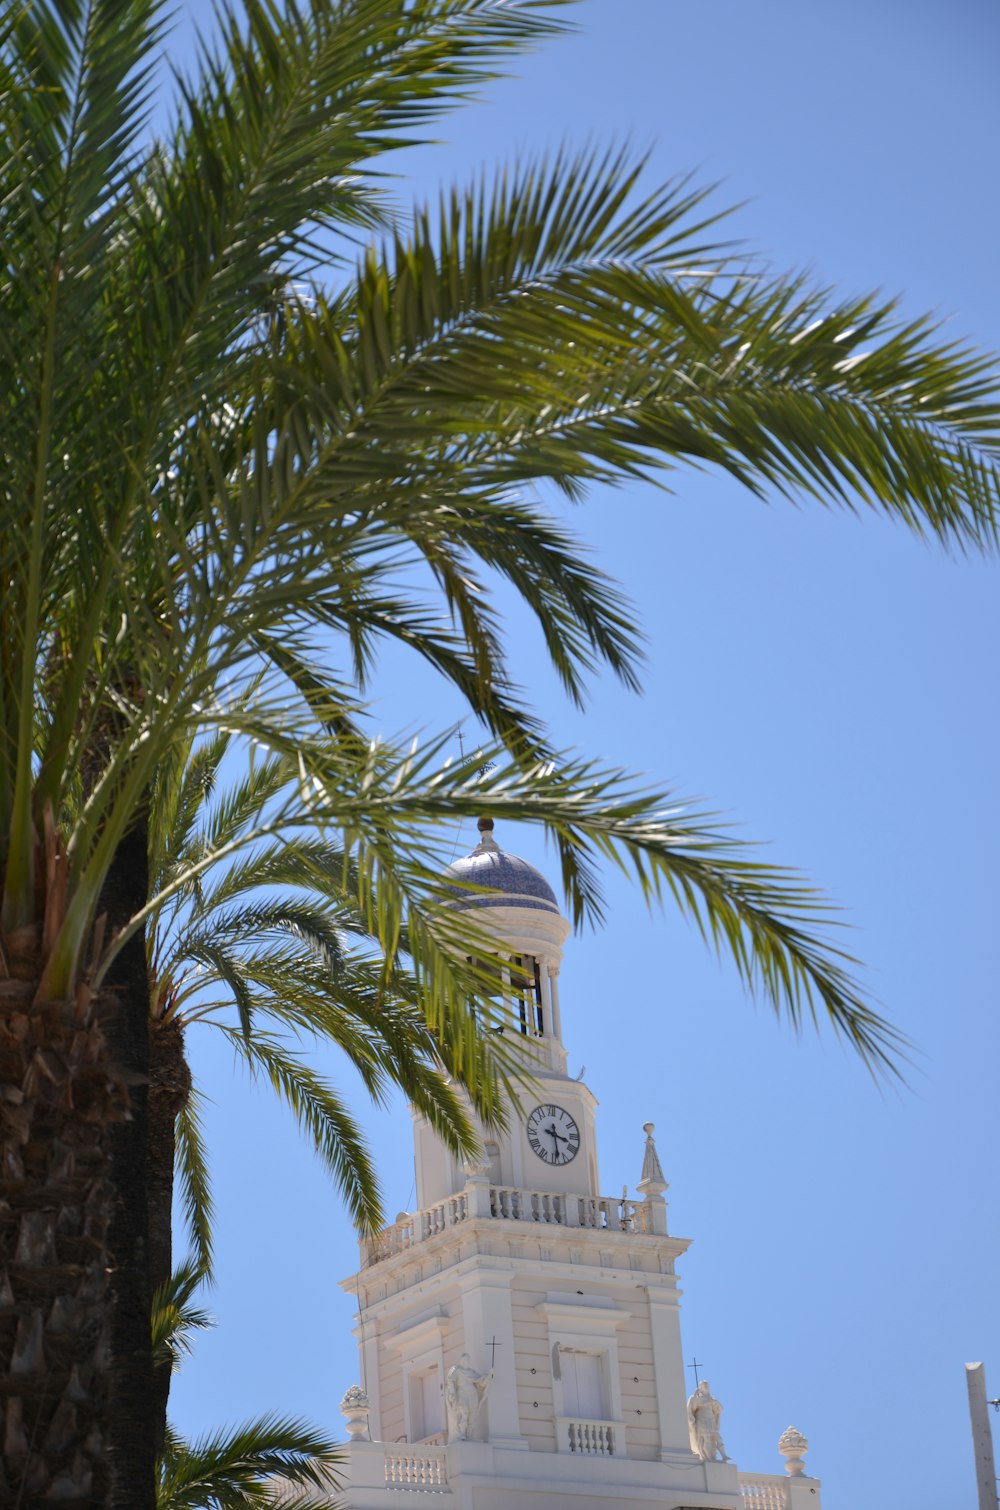 green palm tree near beige concrete building